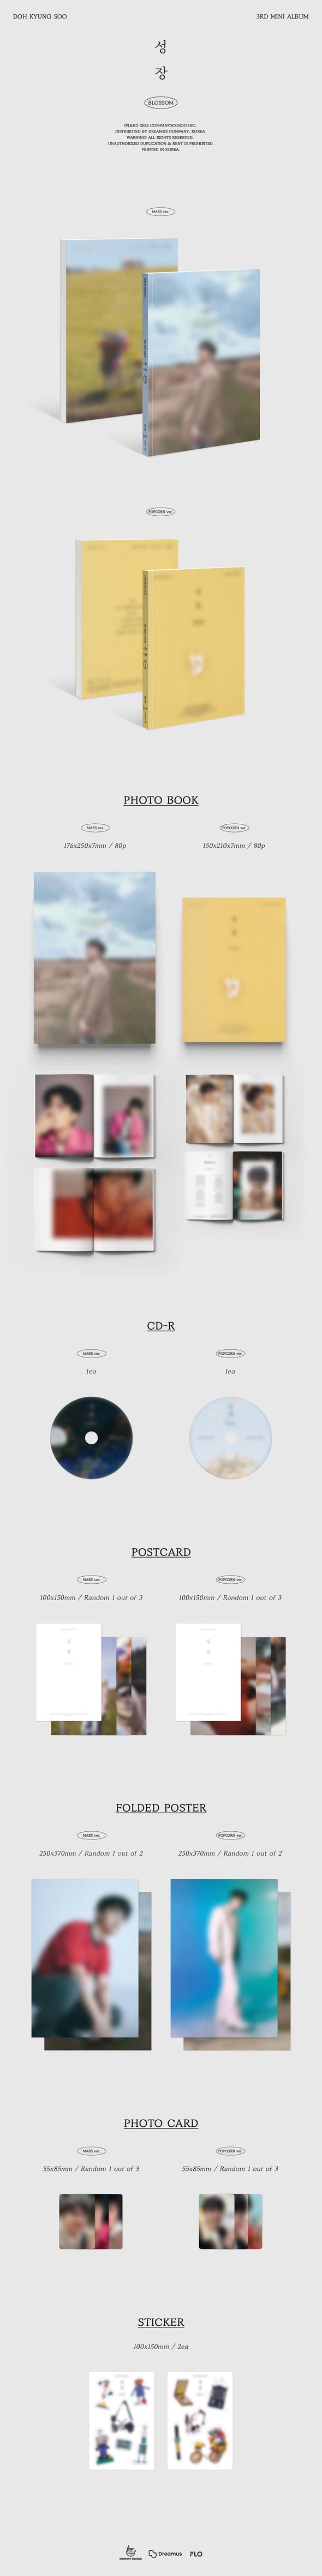 D.O 도경수 - 3rd Mini Album (POPCORN)